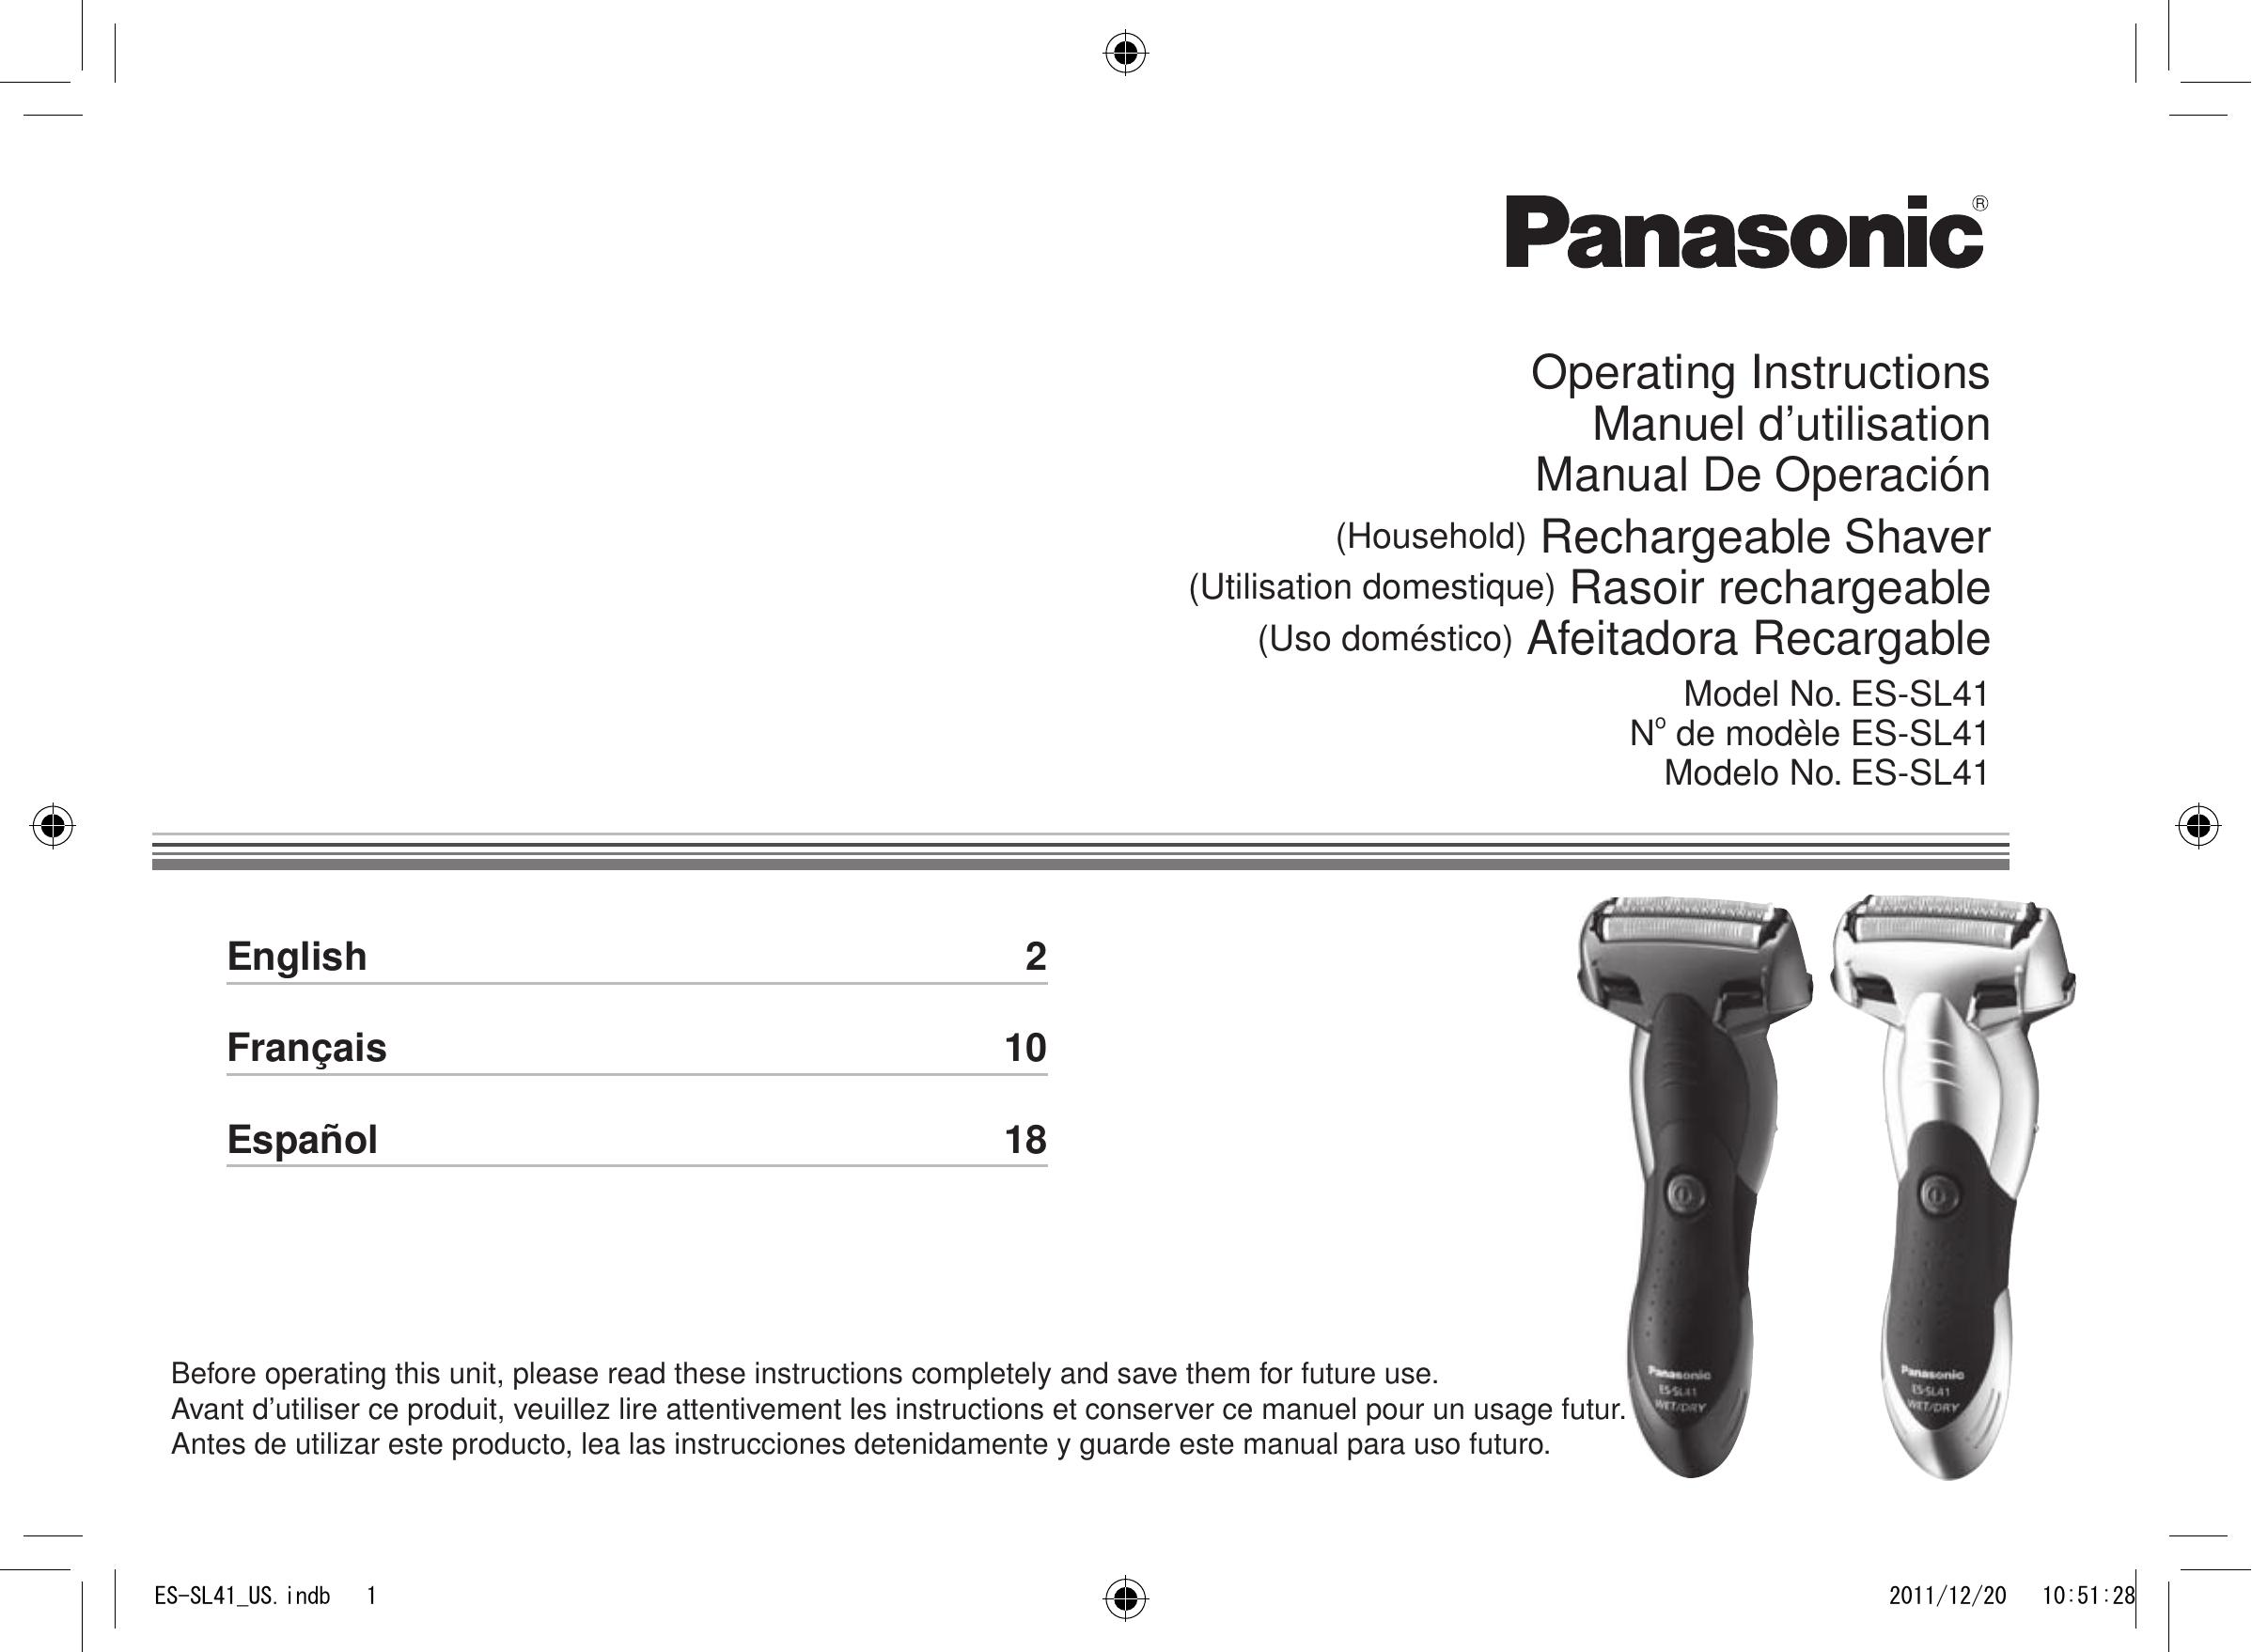 Panasonic ES-SL41 Electric Shaver User Manual